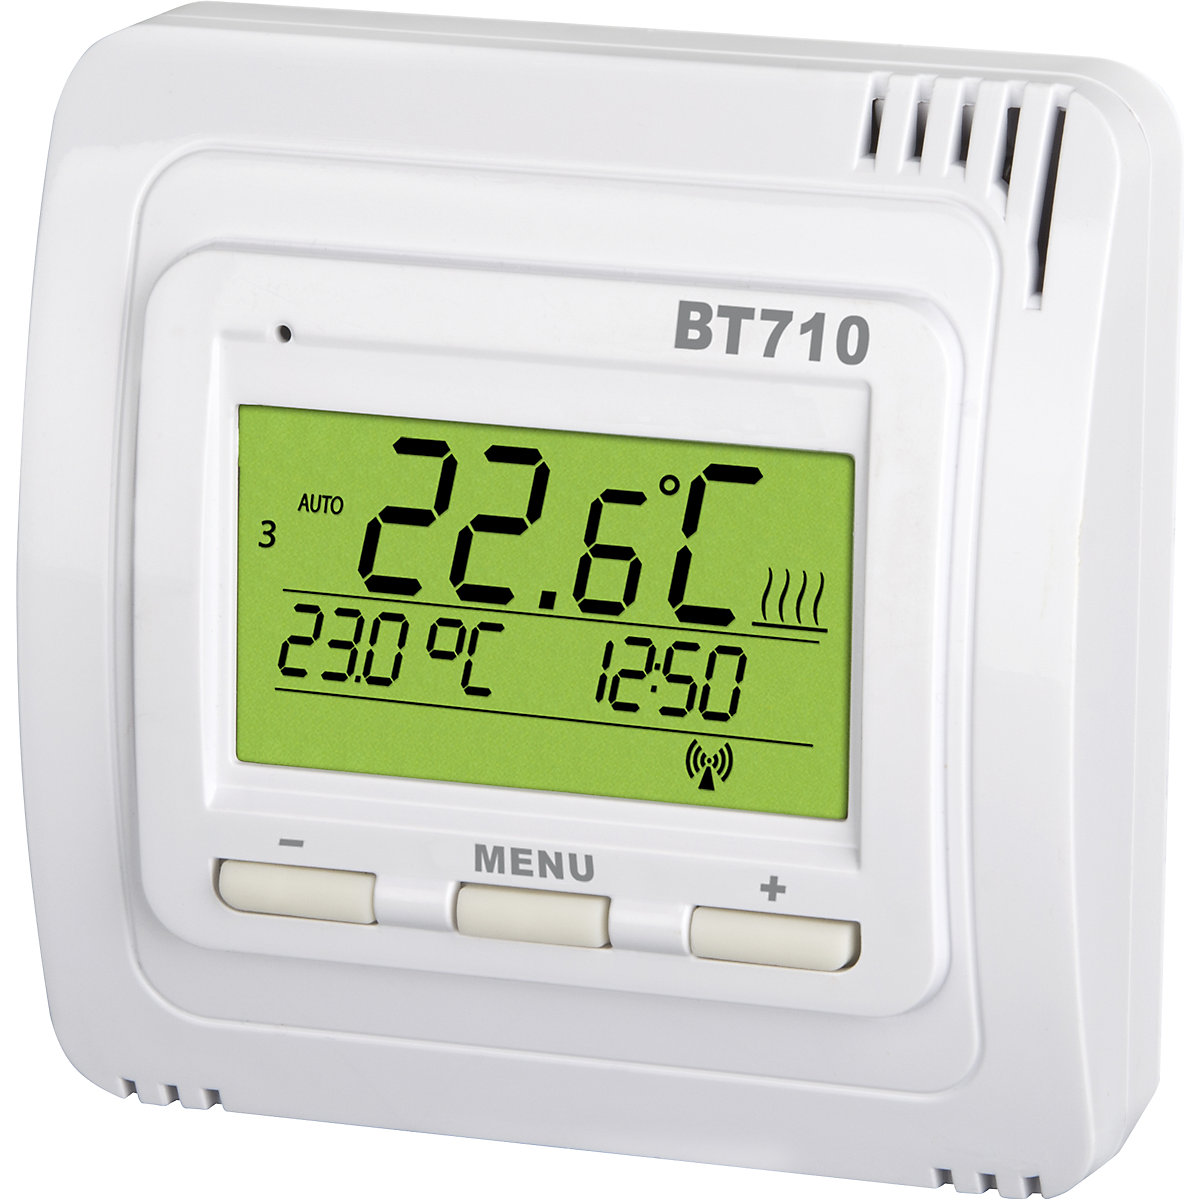 BT710 wireless room thermostat